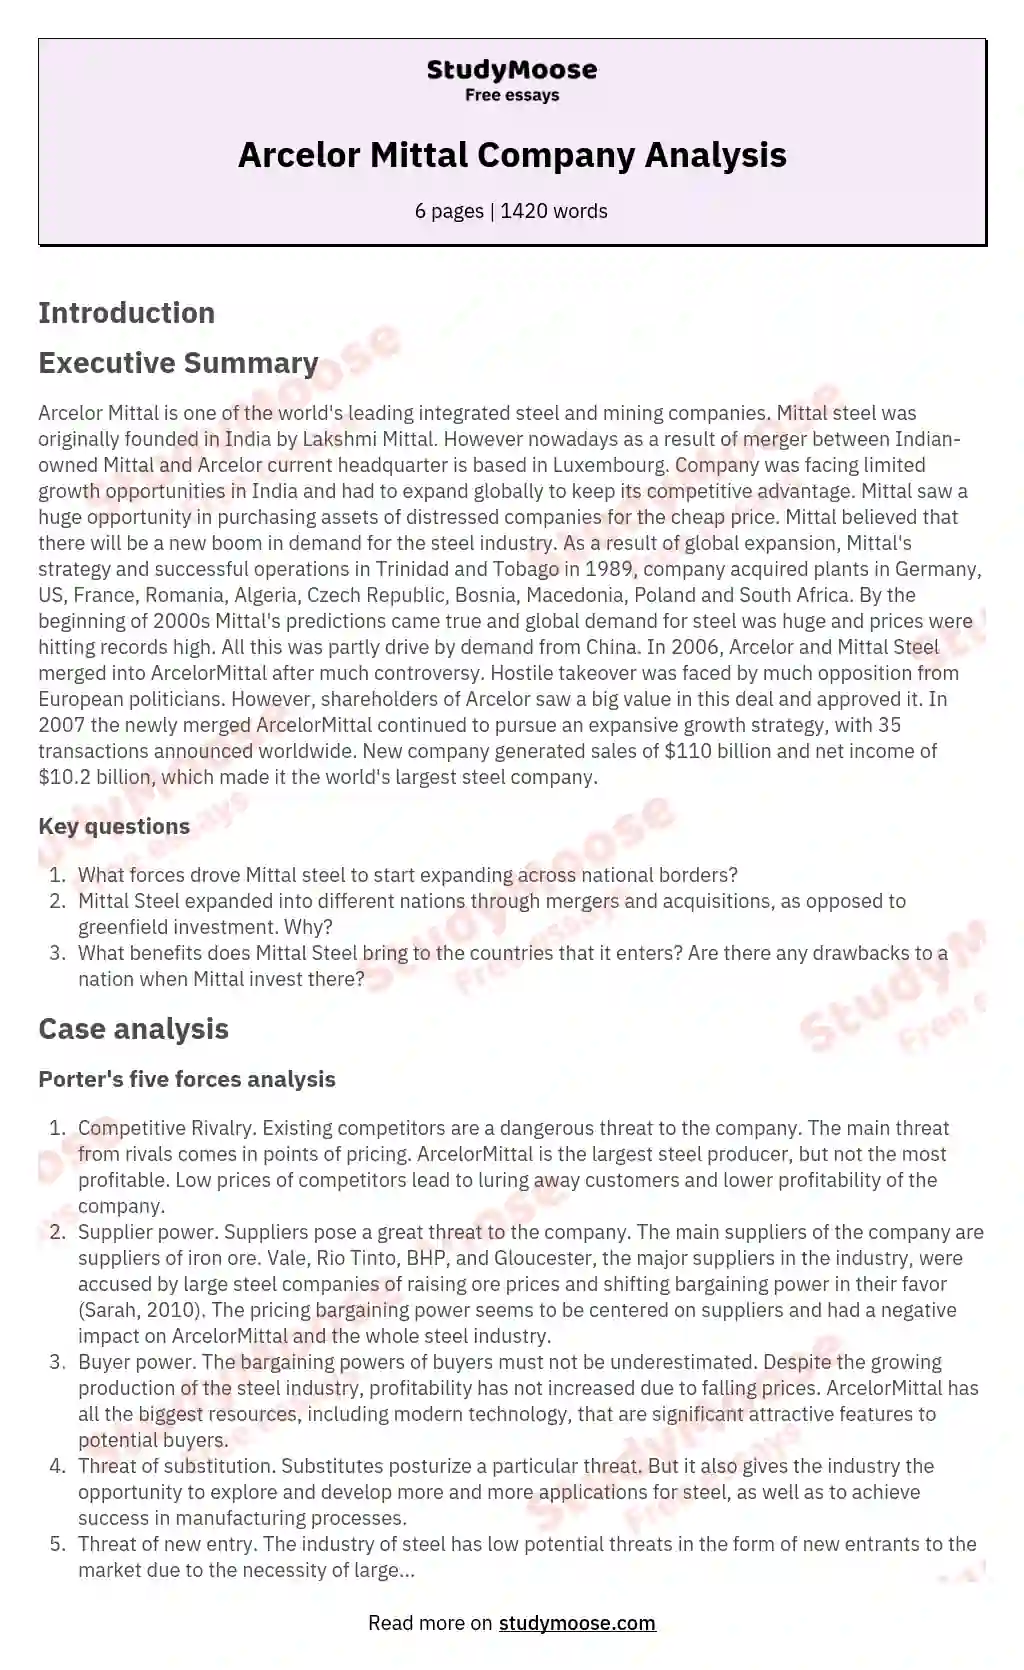 Arcelor Mittal Company Analysis essay